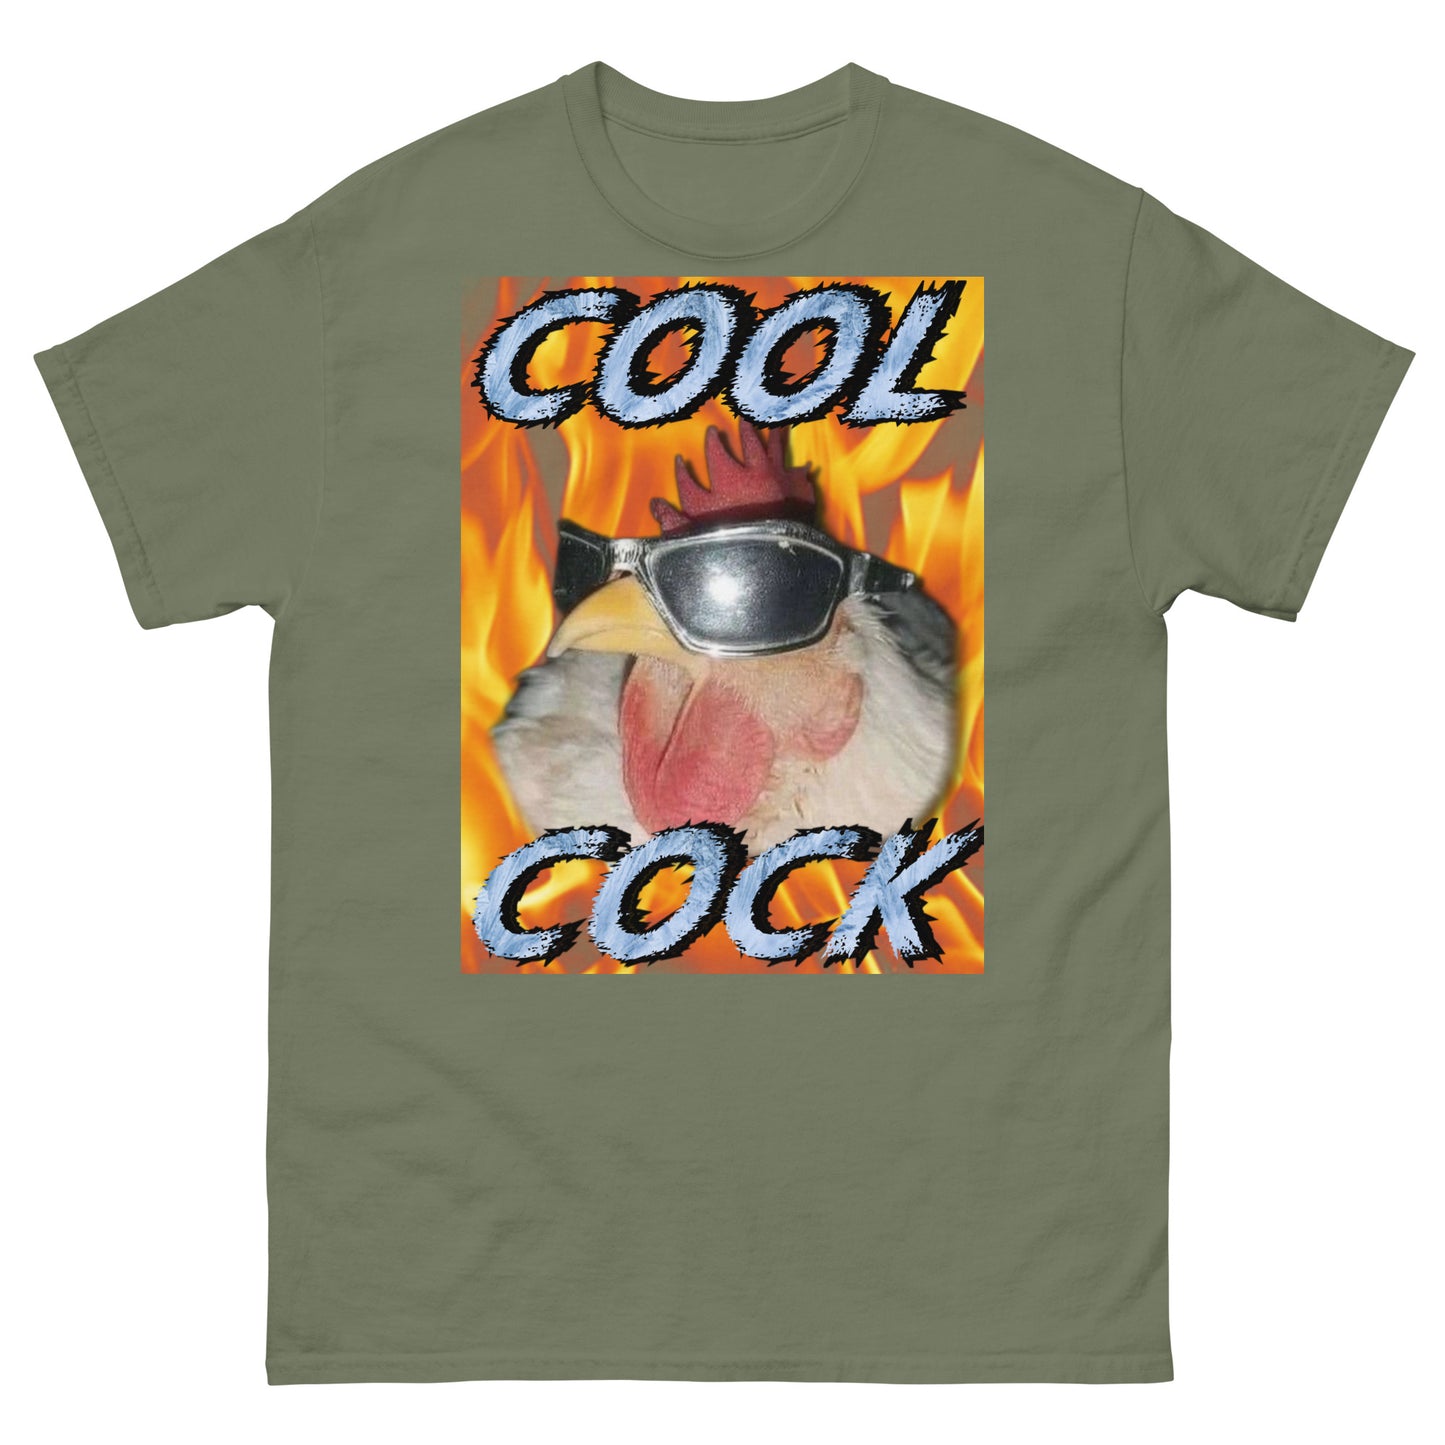 Cool Cock Cringey Tee